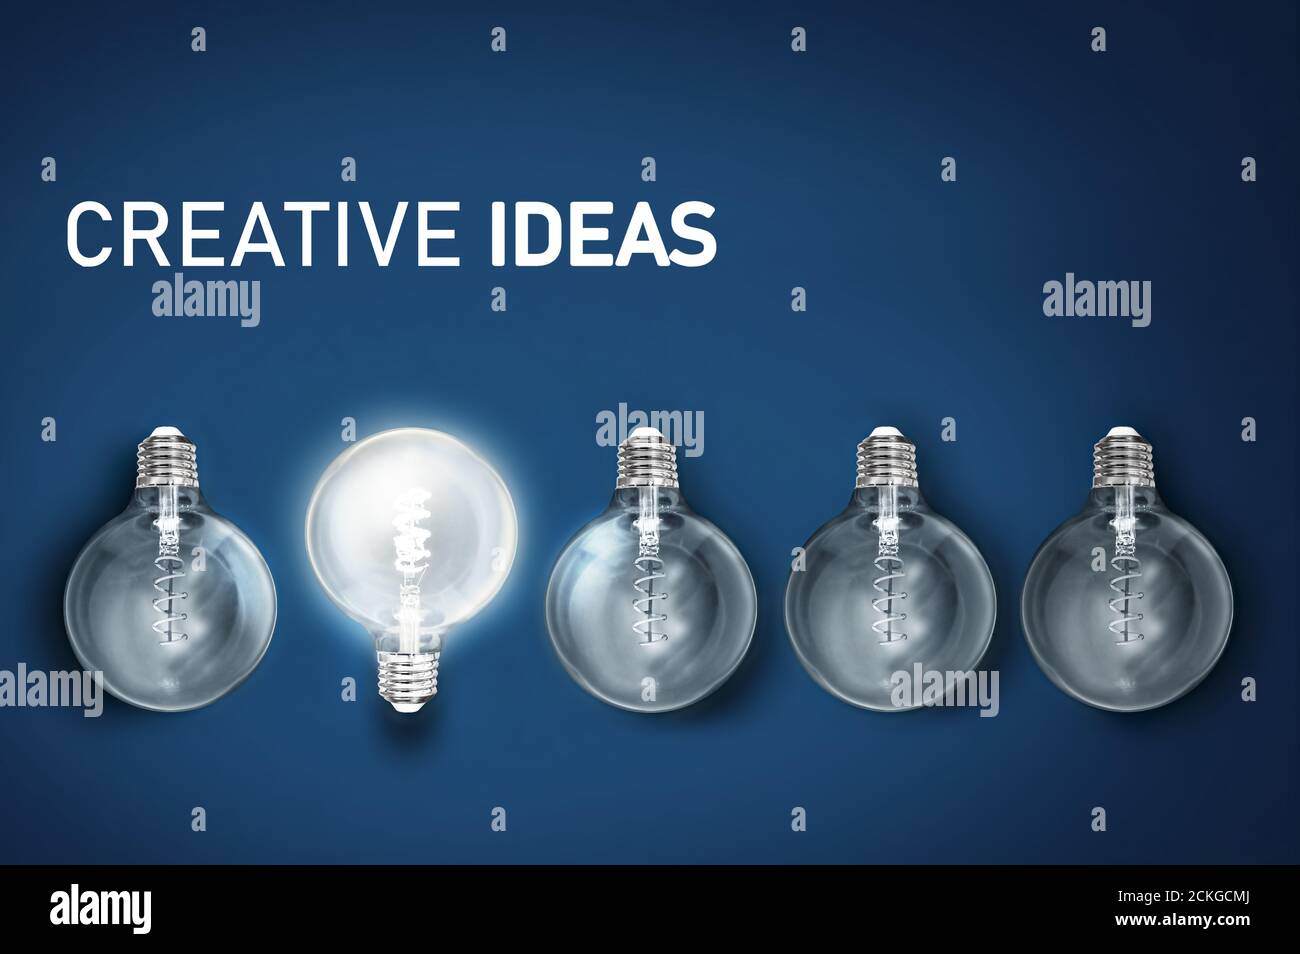 Gran idea, creatividad innovación luz iluminada fila de bombilla dim unos solución concepto Foto de stock